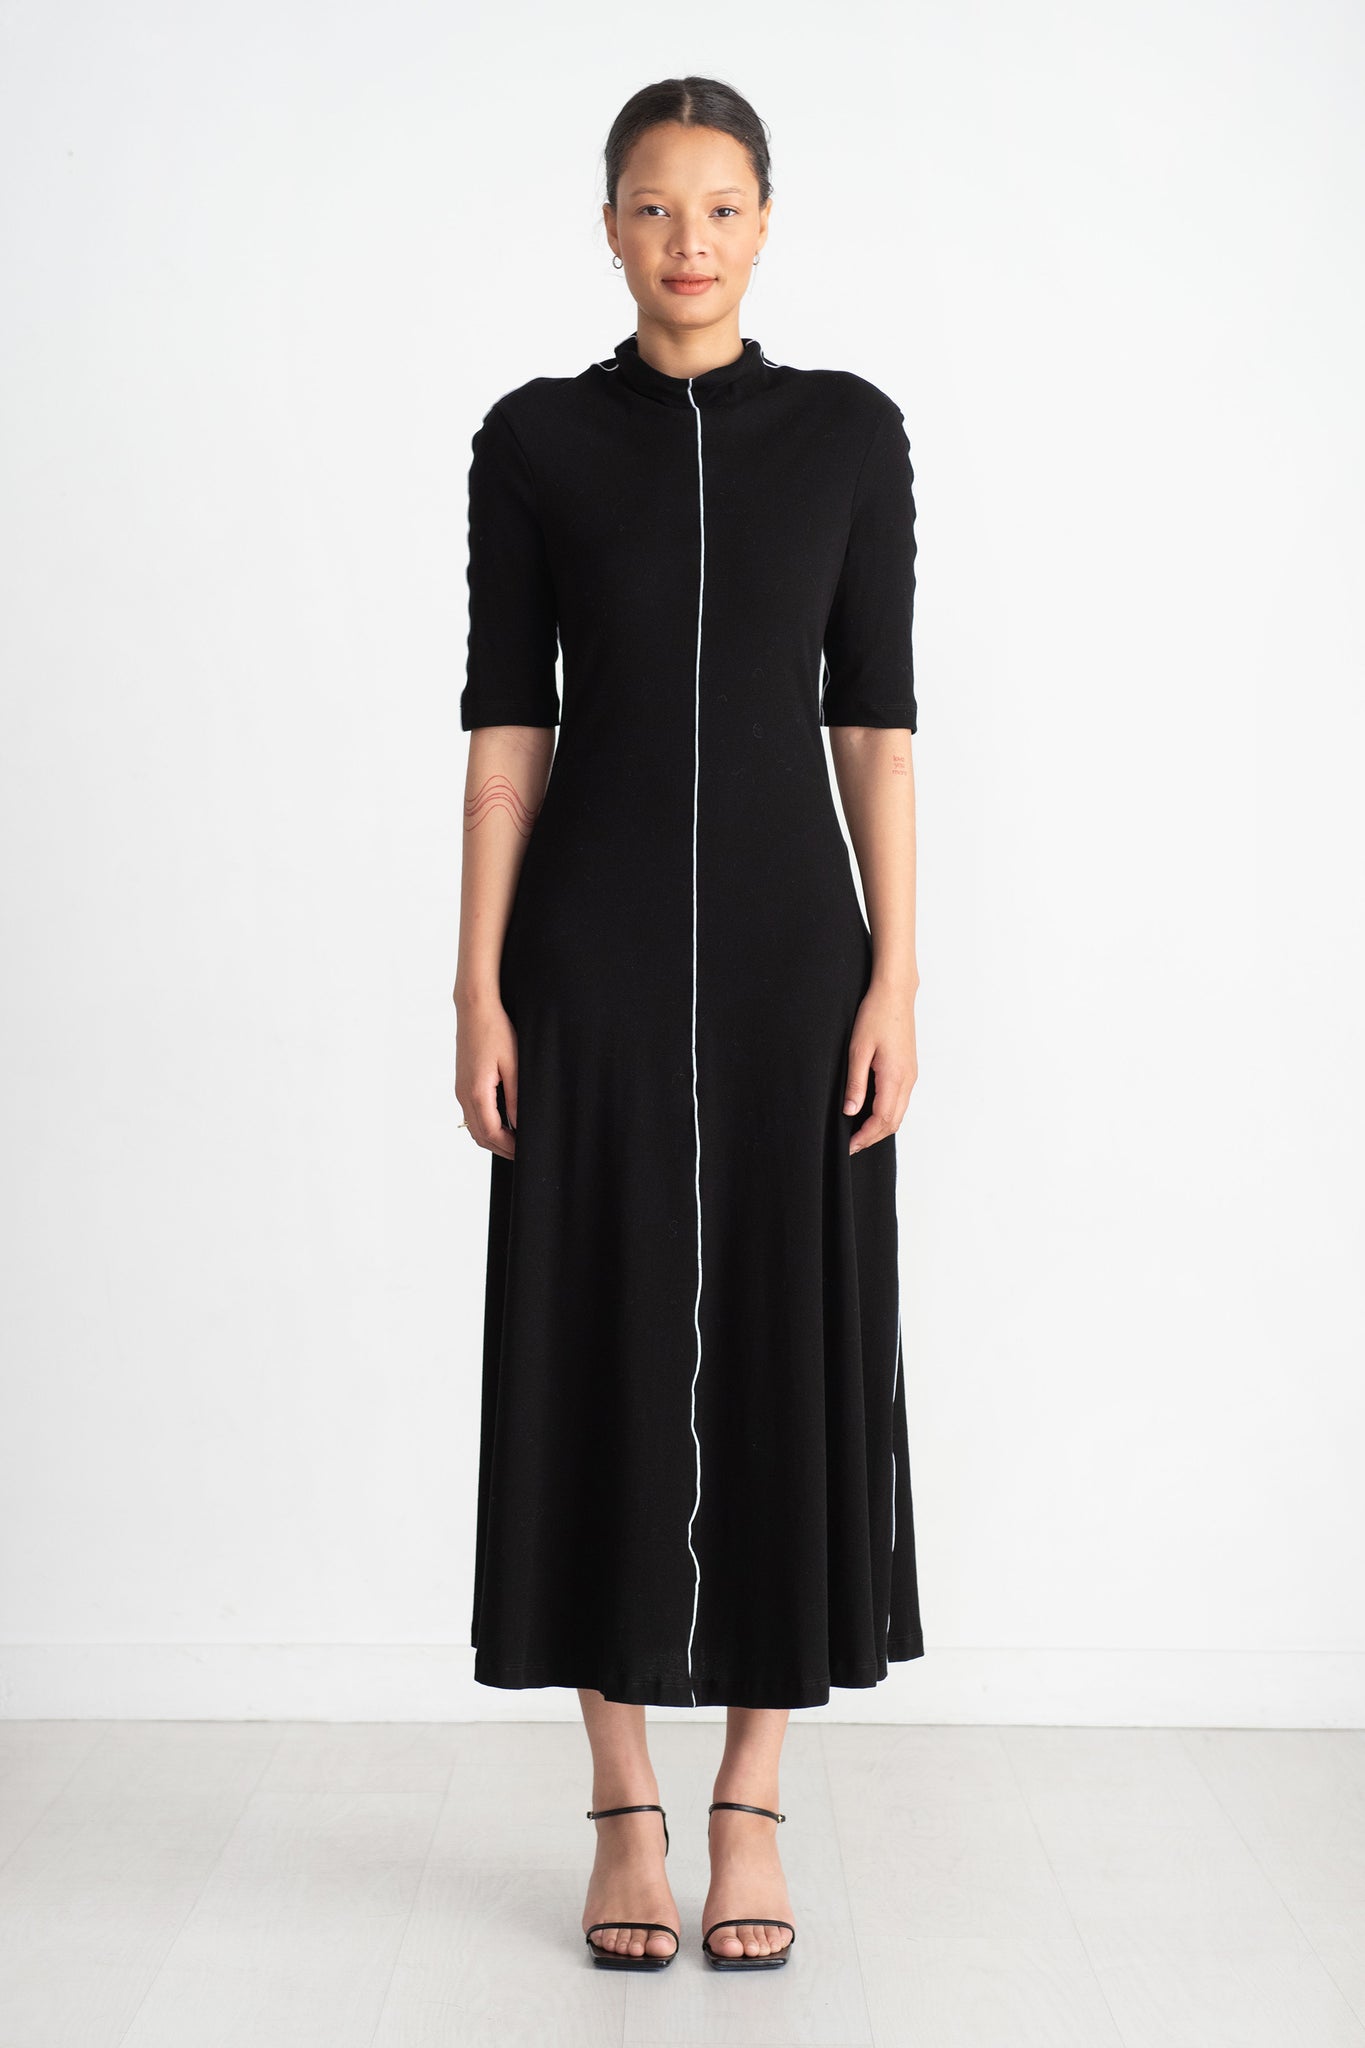 ROSETTA GETTY - Contrast Stitch Mock Neck Dress, Black